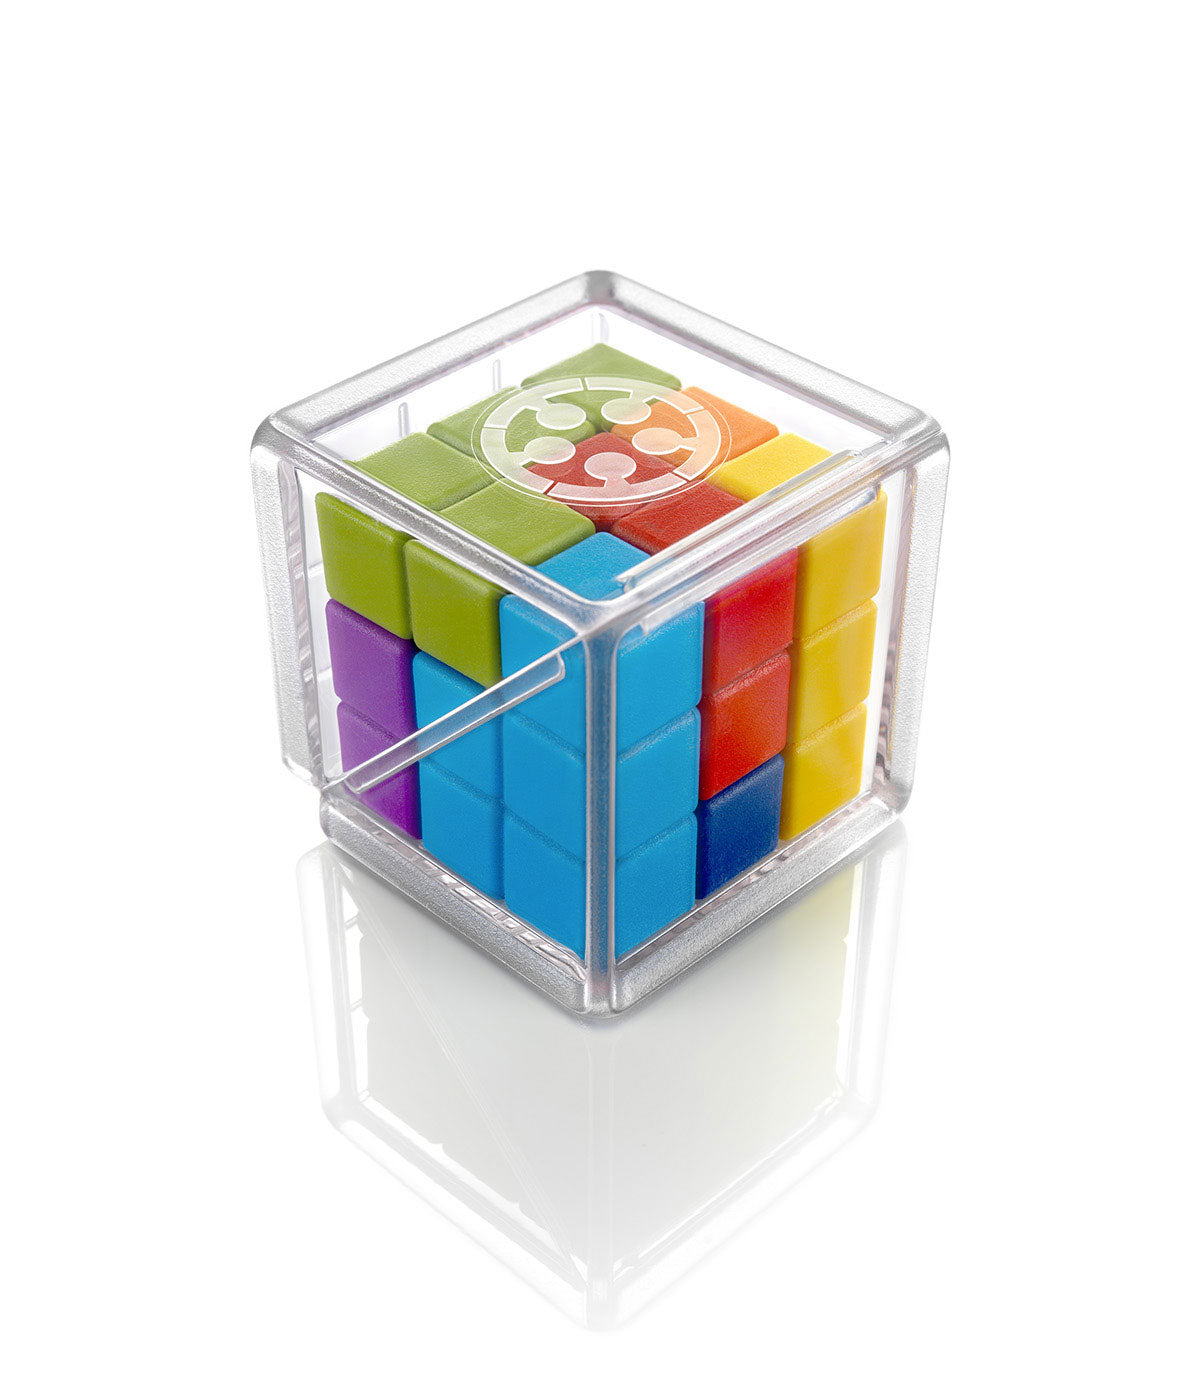 SmartGames Cube Puzzler: Go